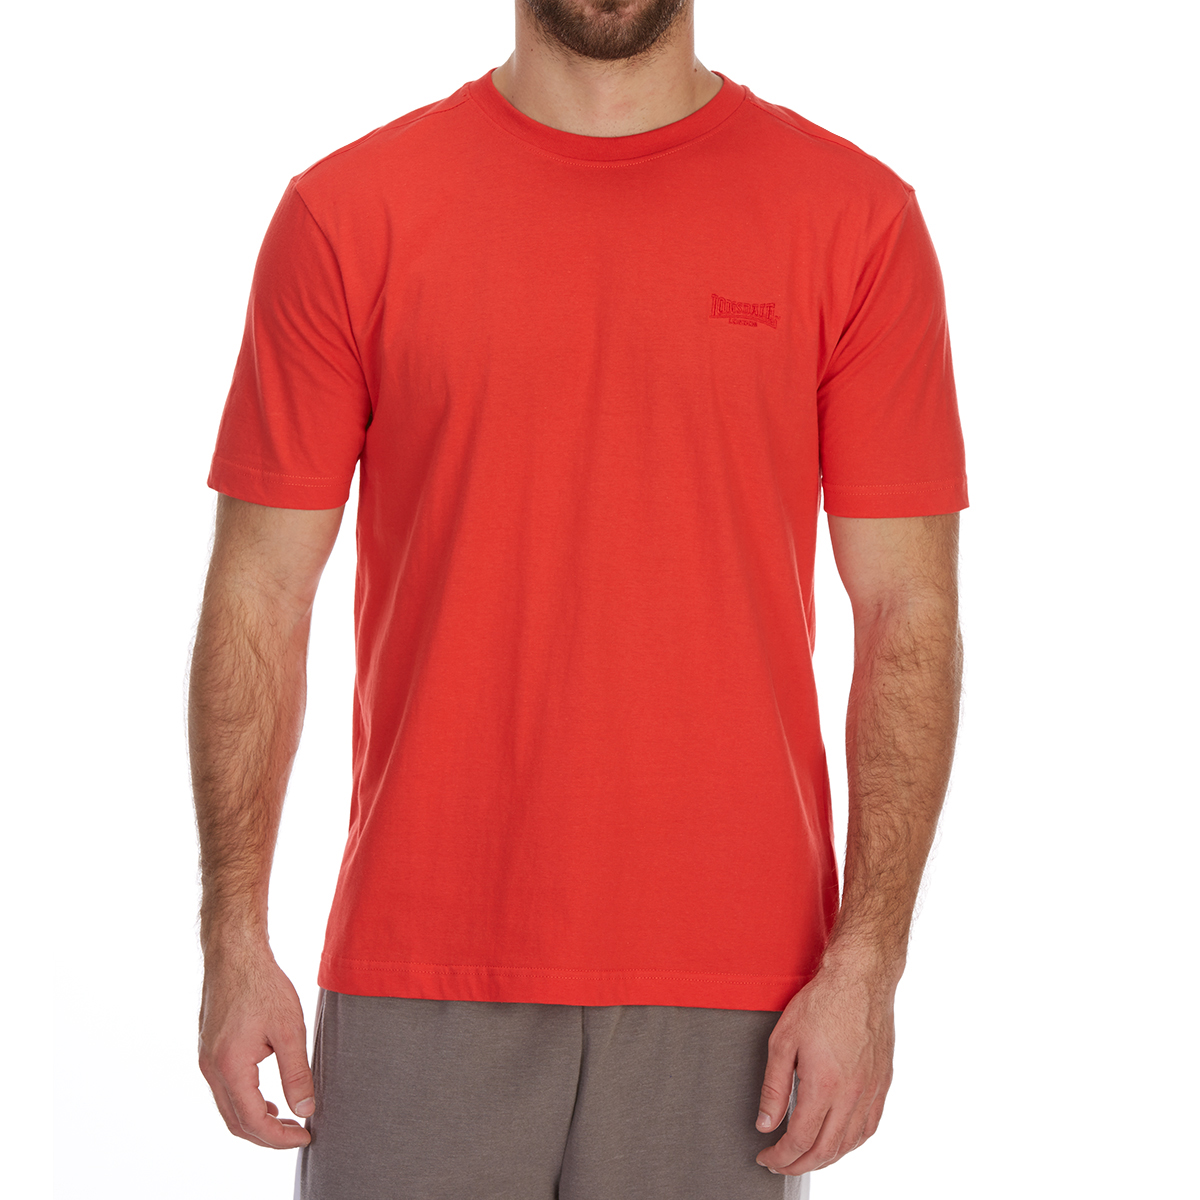 Lonsdale Men's Plain Short-Sleeve Tee - Red, L